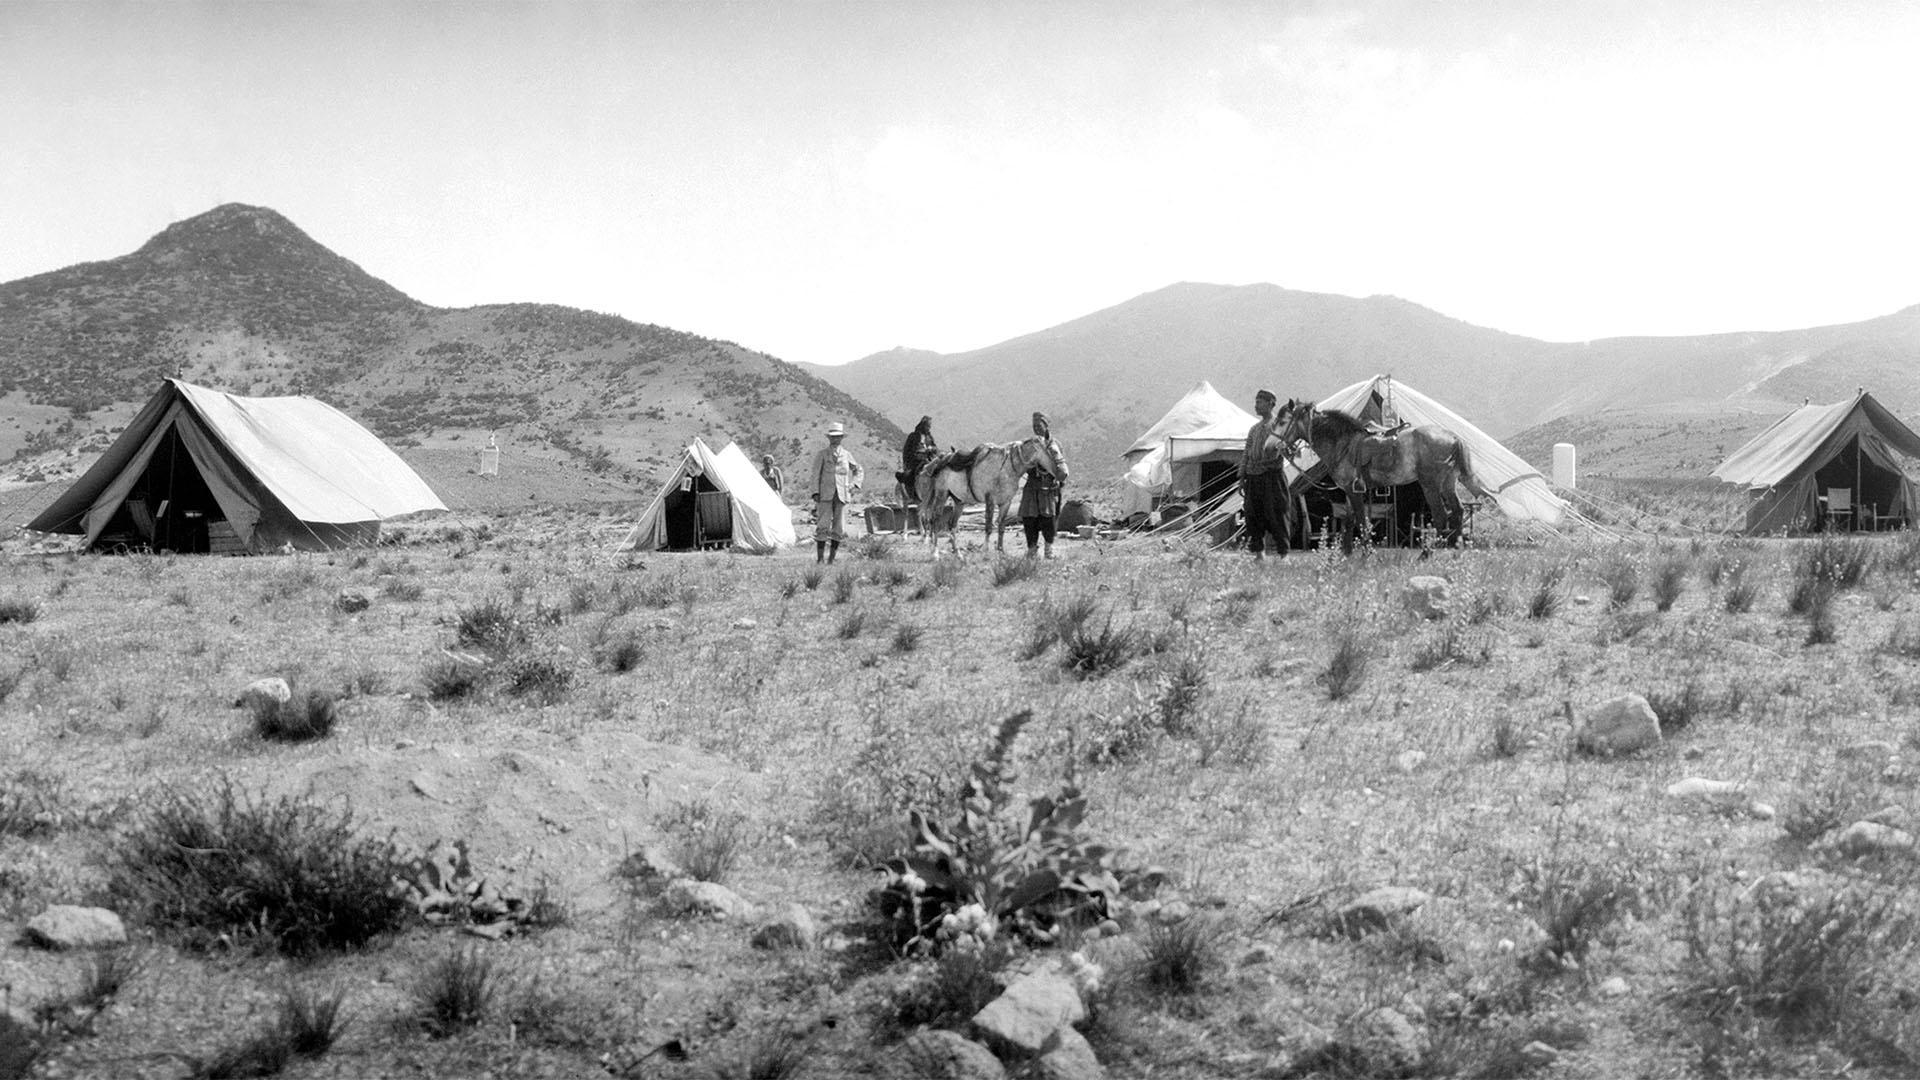 Gertrude Bell's camp in 1907, Bin Bir Kilisse, Turkey.